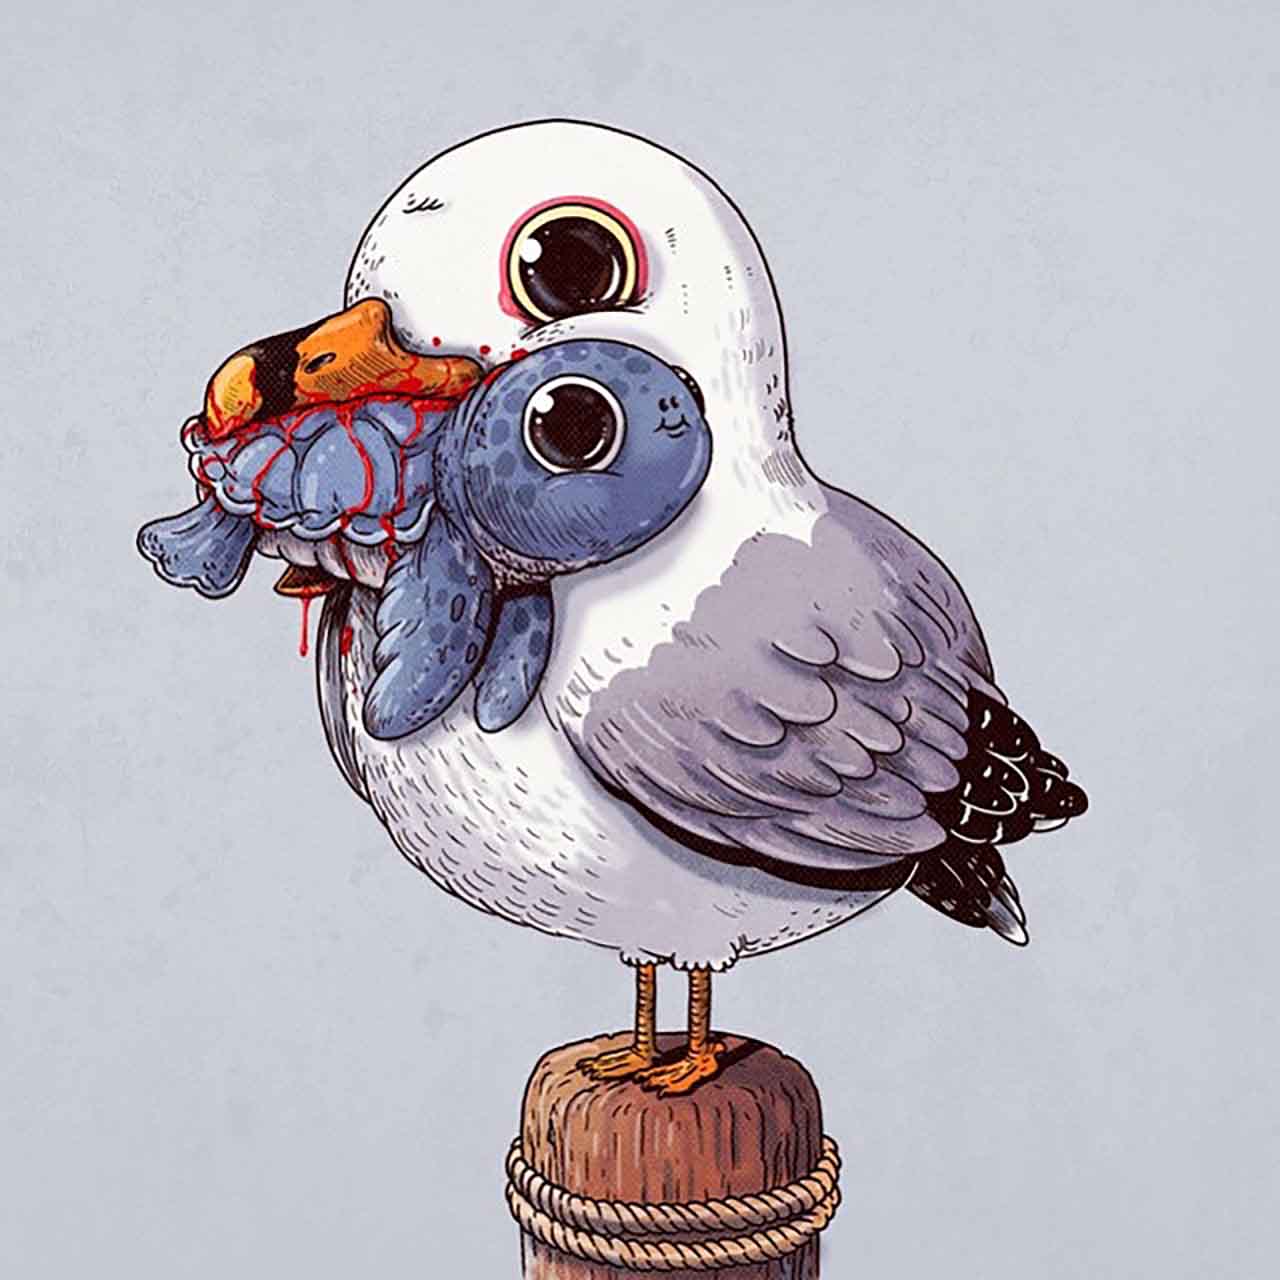  Artist Creates Extremely Adorable “Predator & Prey” Illustrations #3: Seagull & Sea Turtle